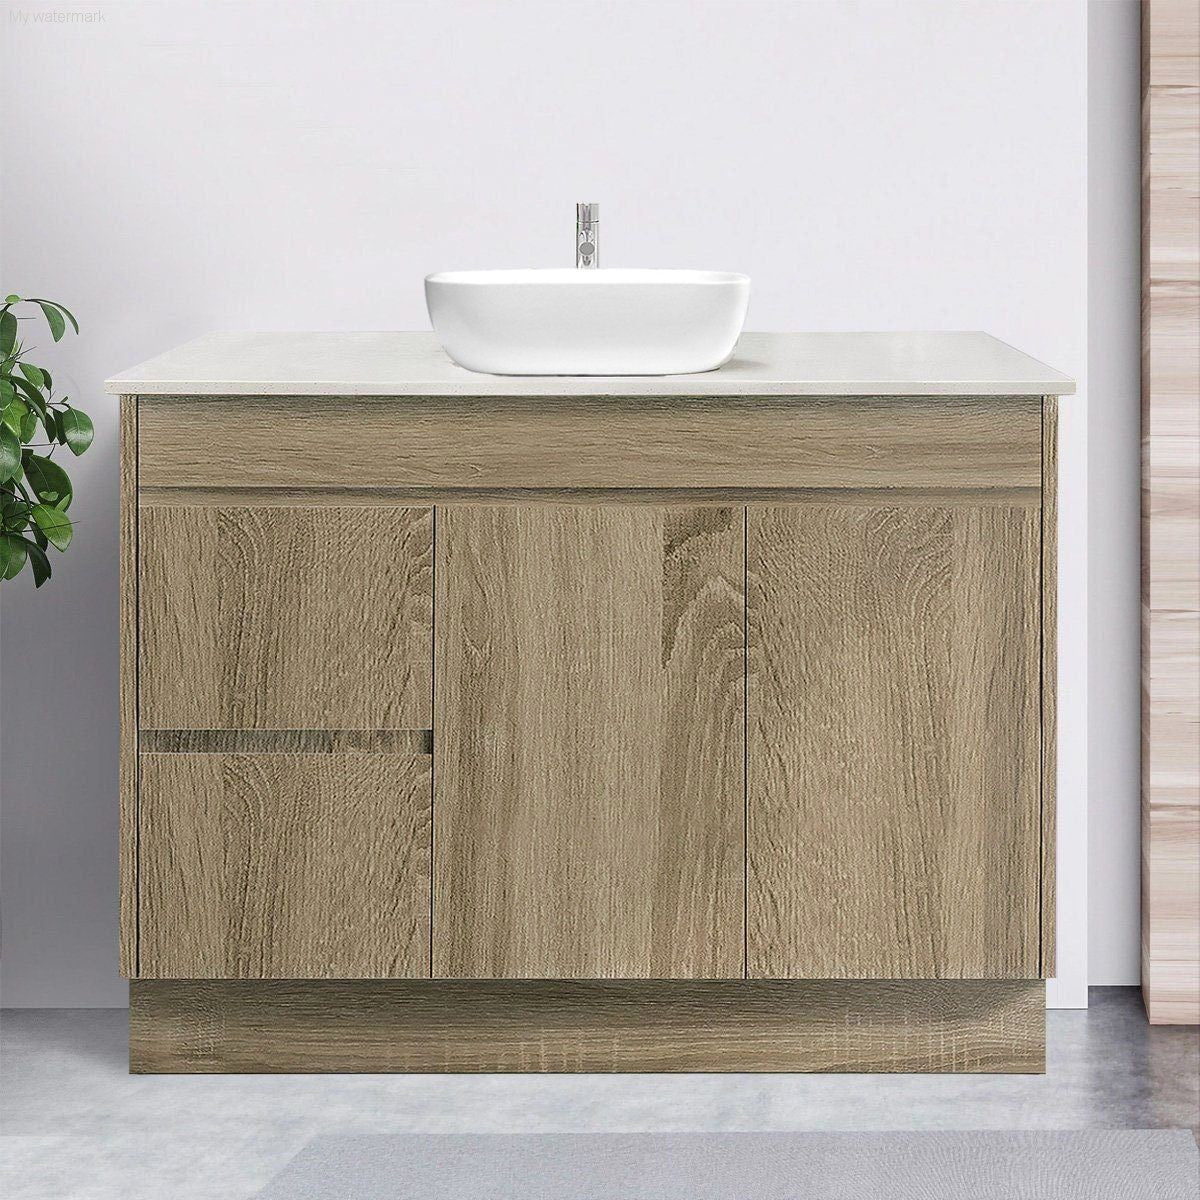 120cm Timber Bathroom Vanity LH